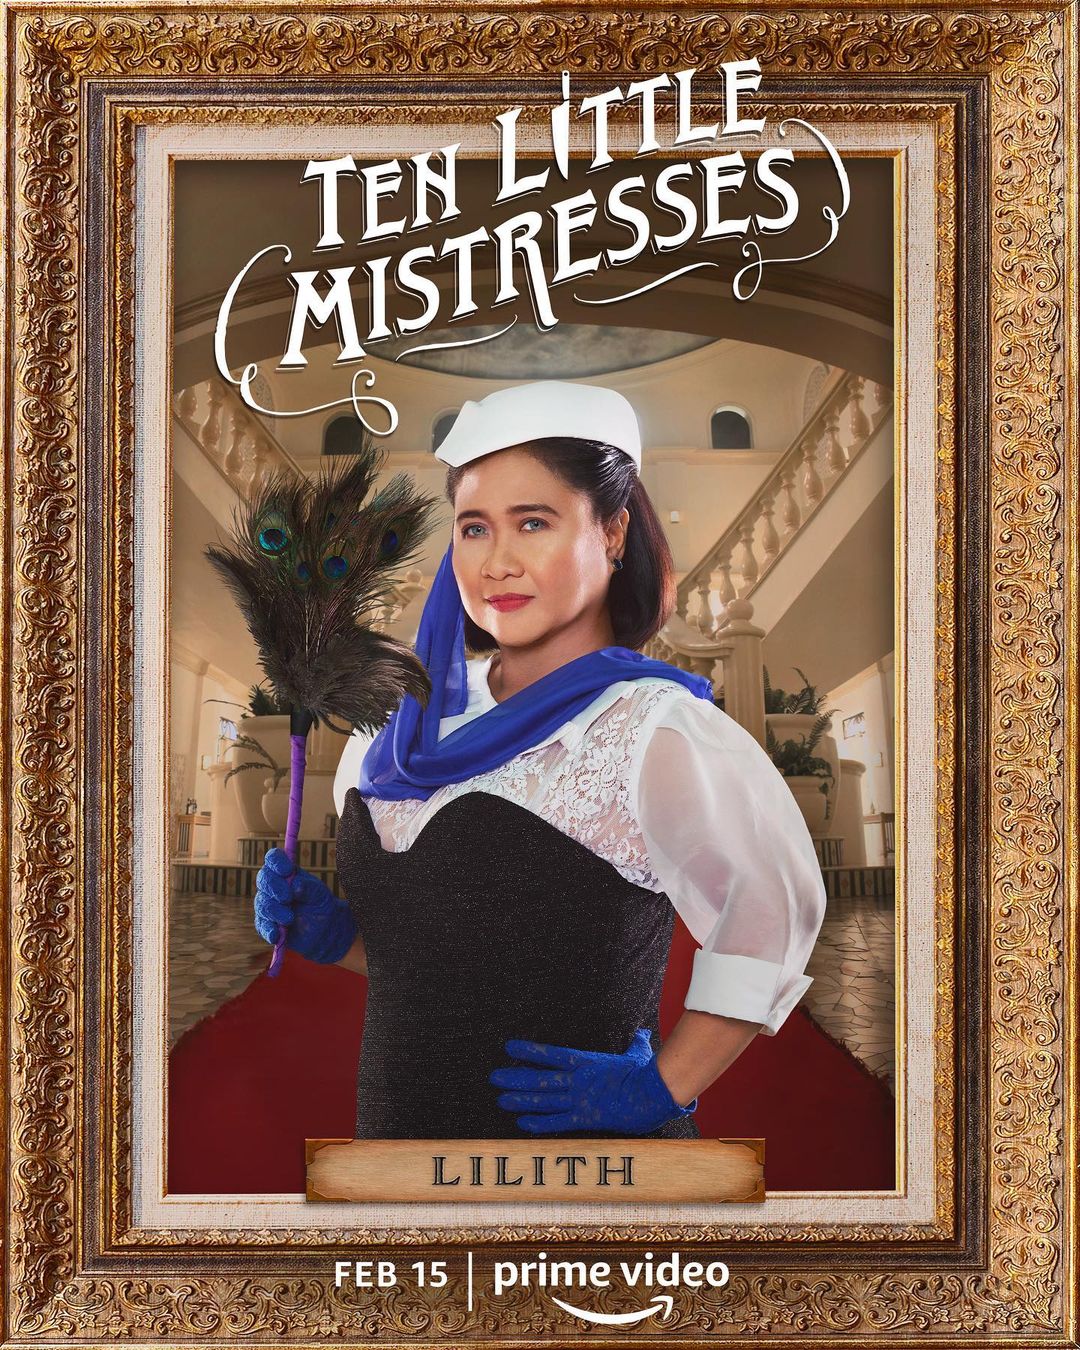 Ten Little Mistresses : Eugene Domingo as Lilith